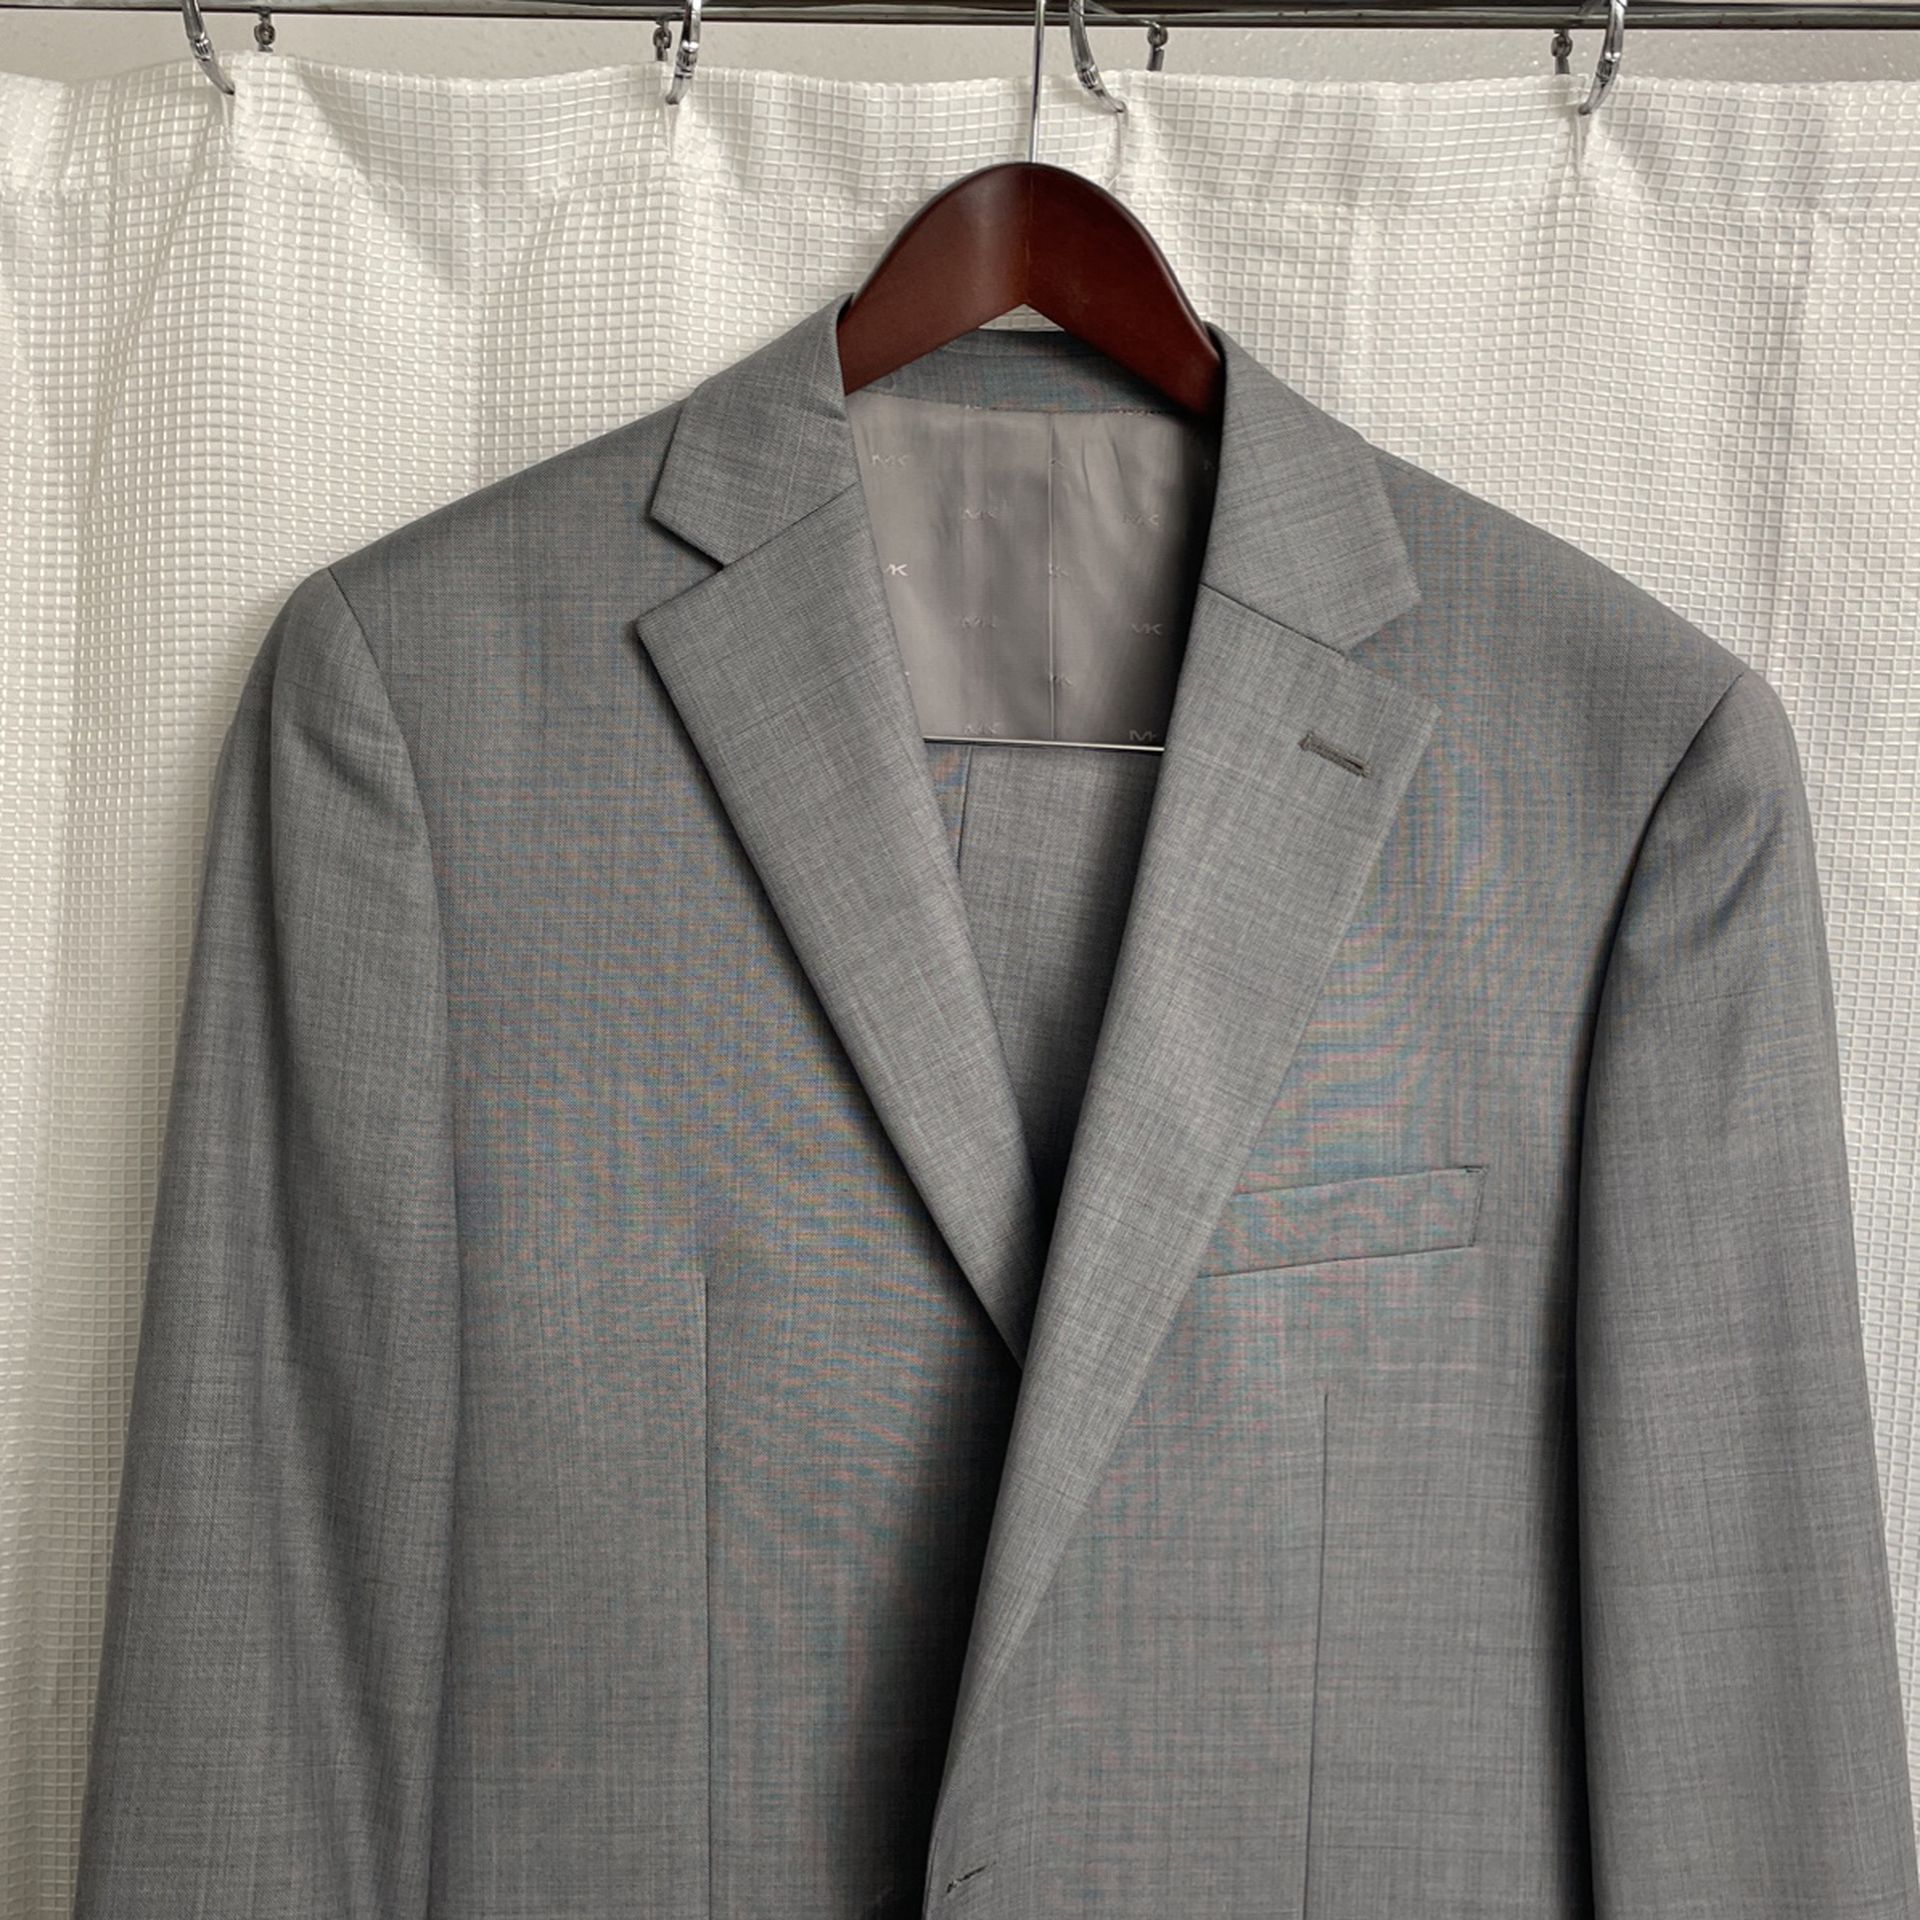 Michael Kors Men Suit for Sale in San Diego, CA - OfferUp